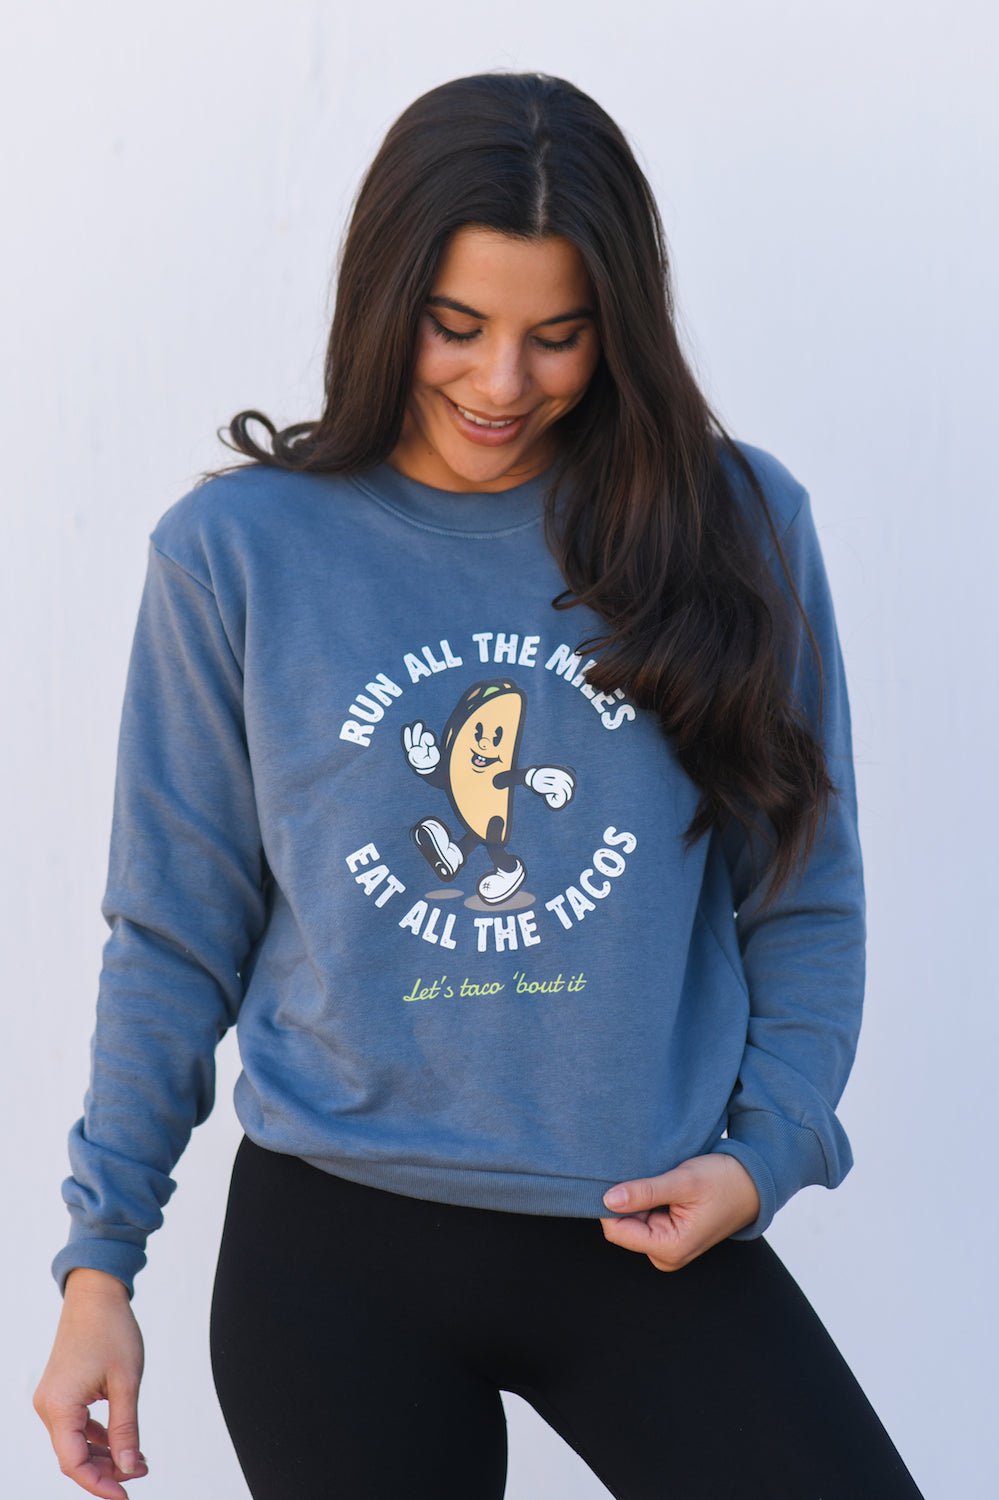 Sarah Marie Design Studio Sweatshirt XSmall Run All The Miles, Eat All The Tacos Women's Sweatshirt